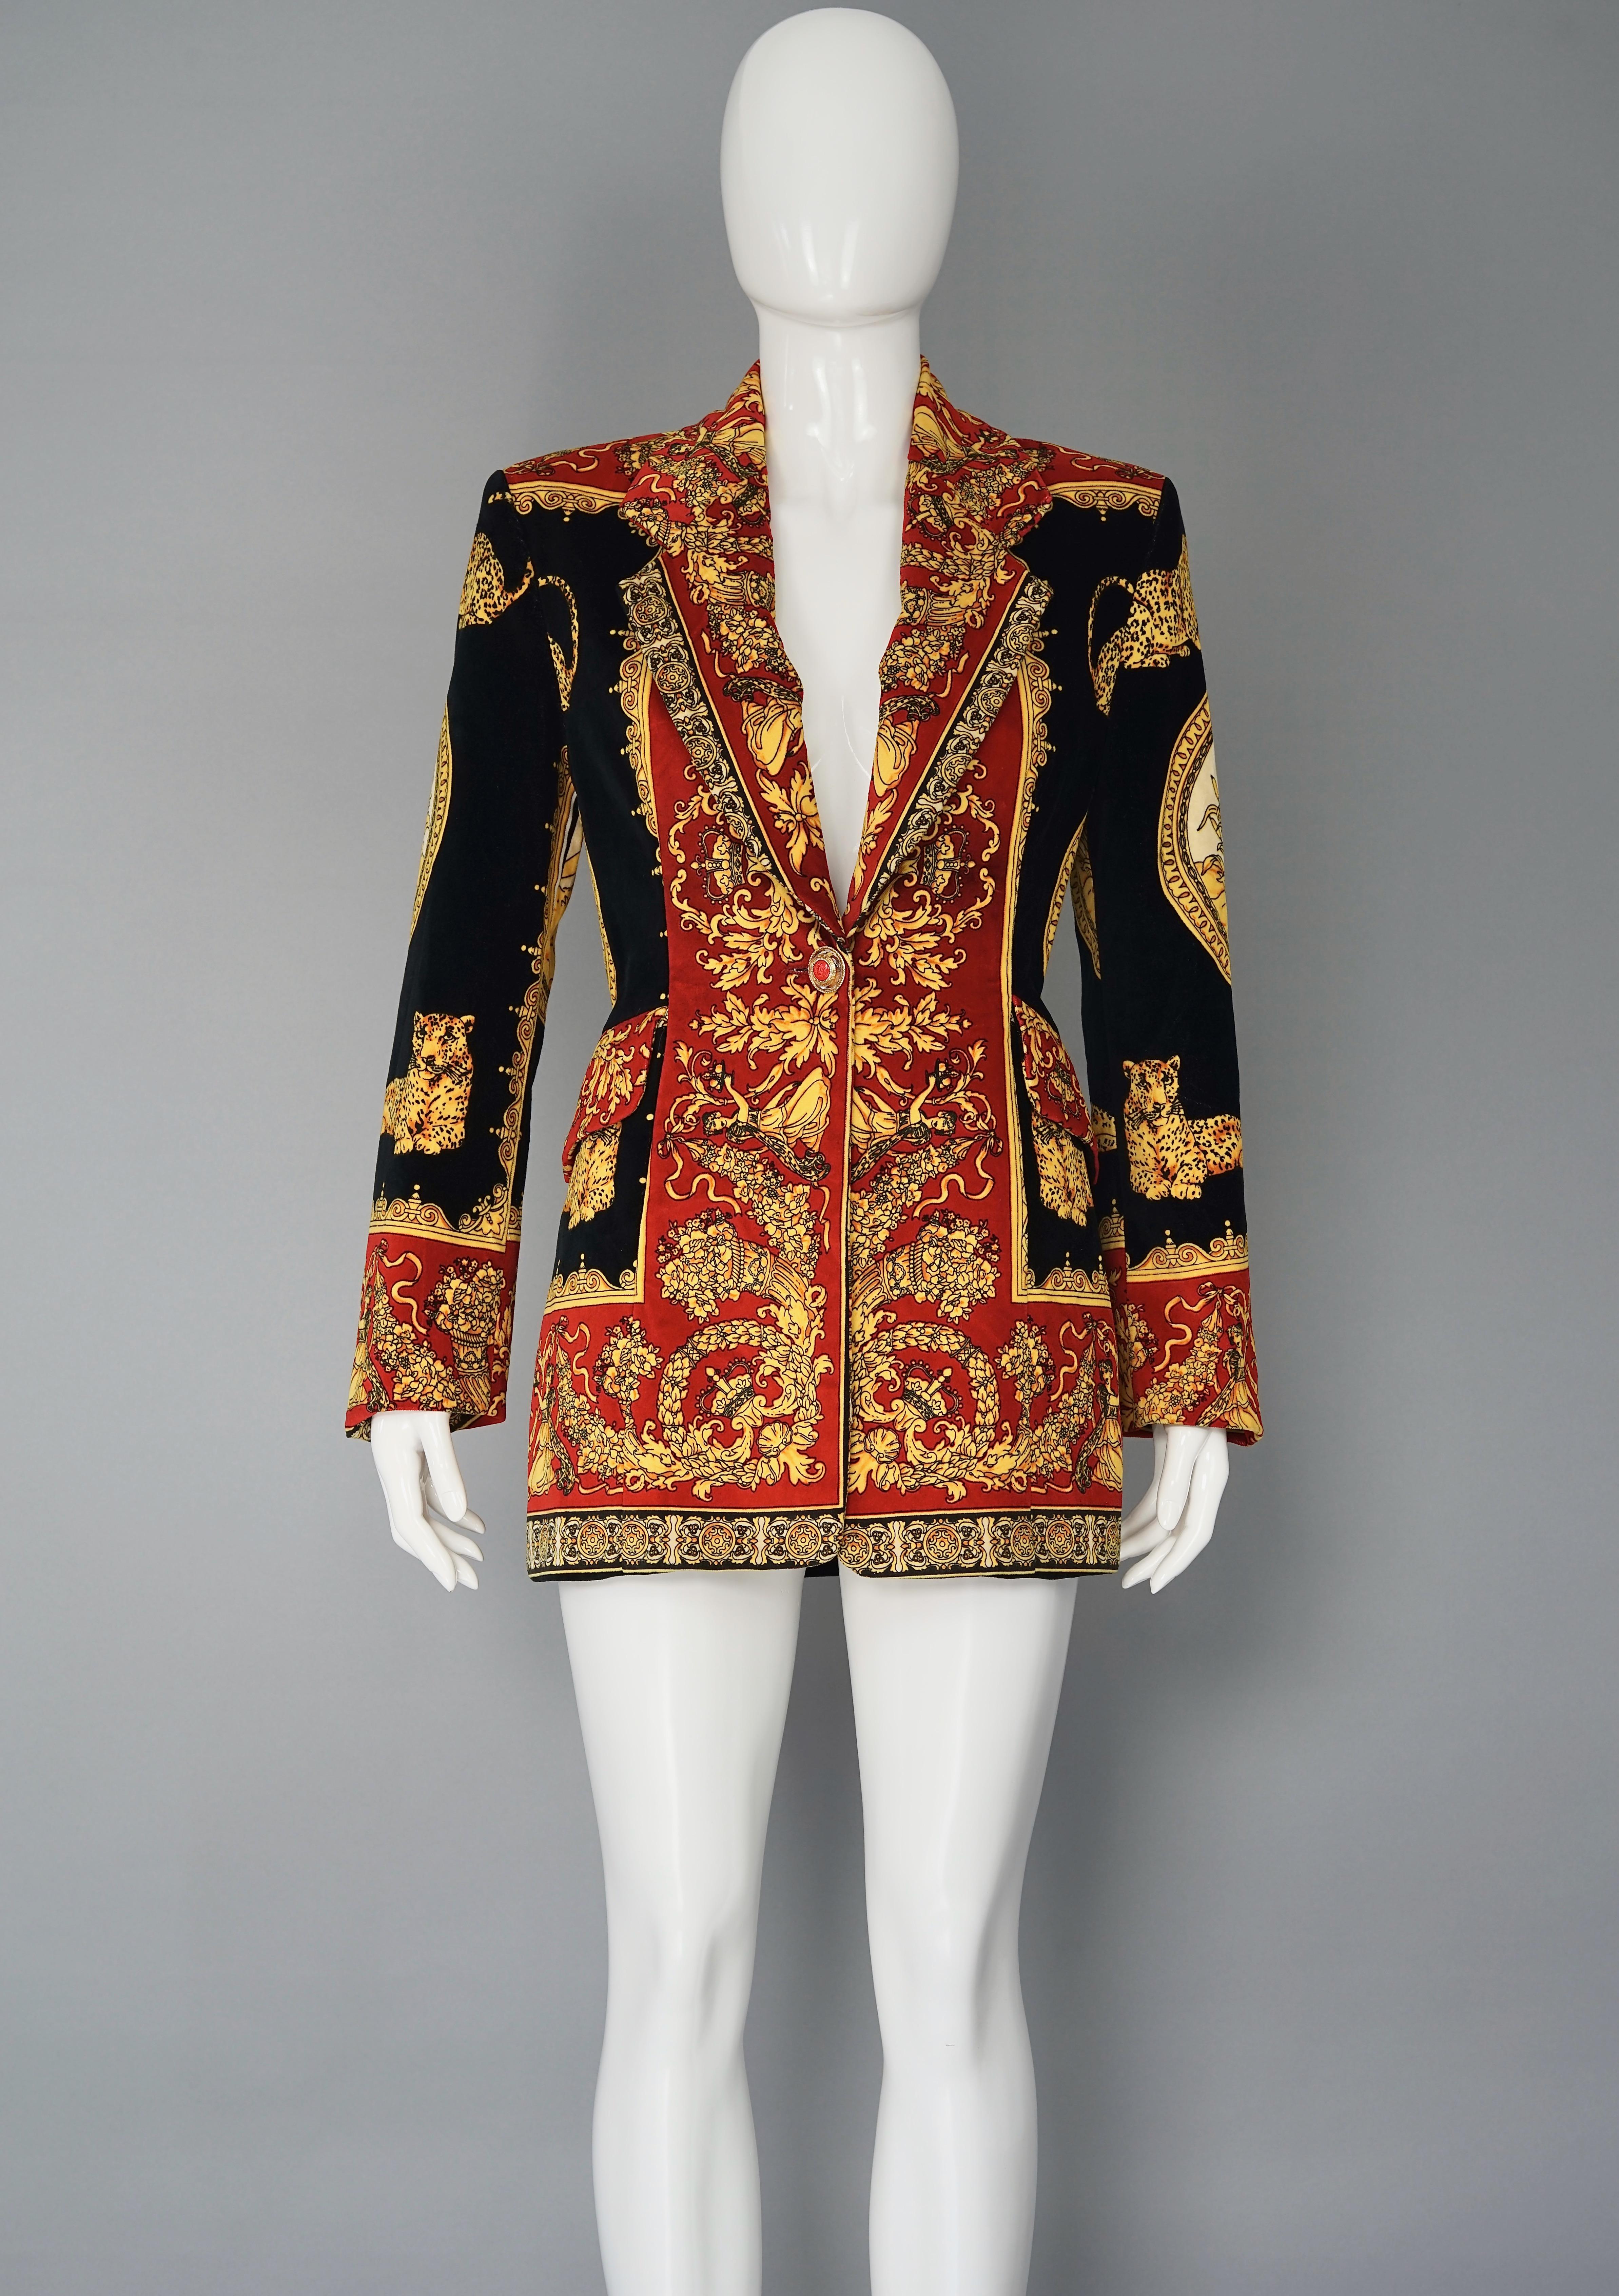 Vintage KAMOSHO PARIS Velvet Opulent Baroque Jacket

